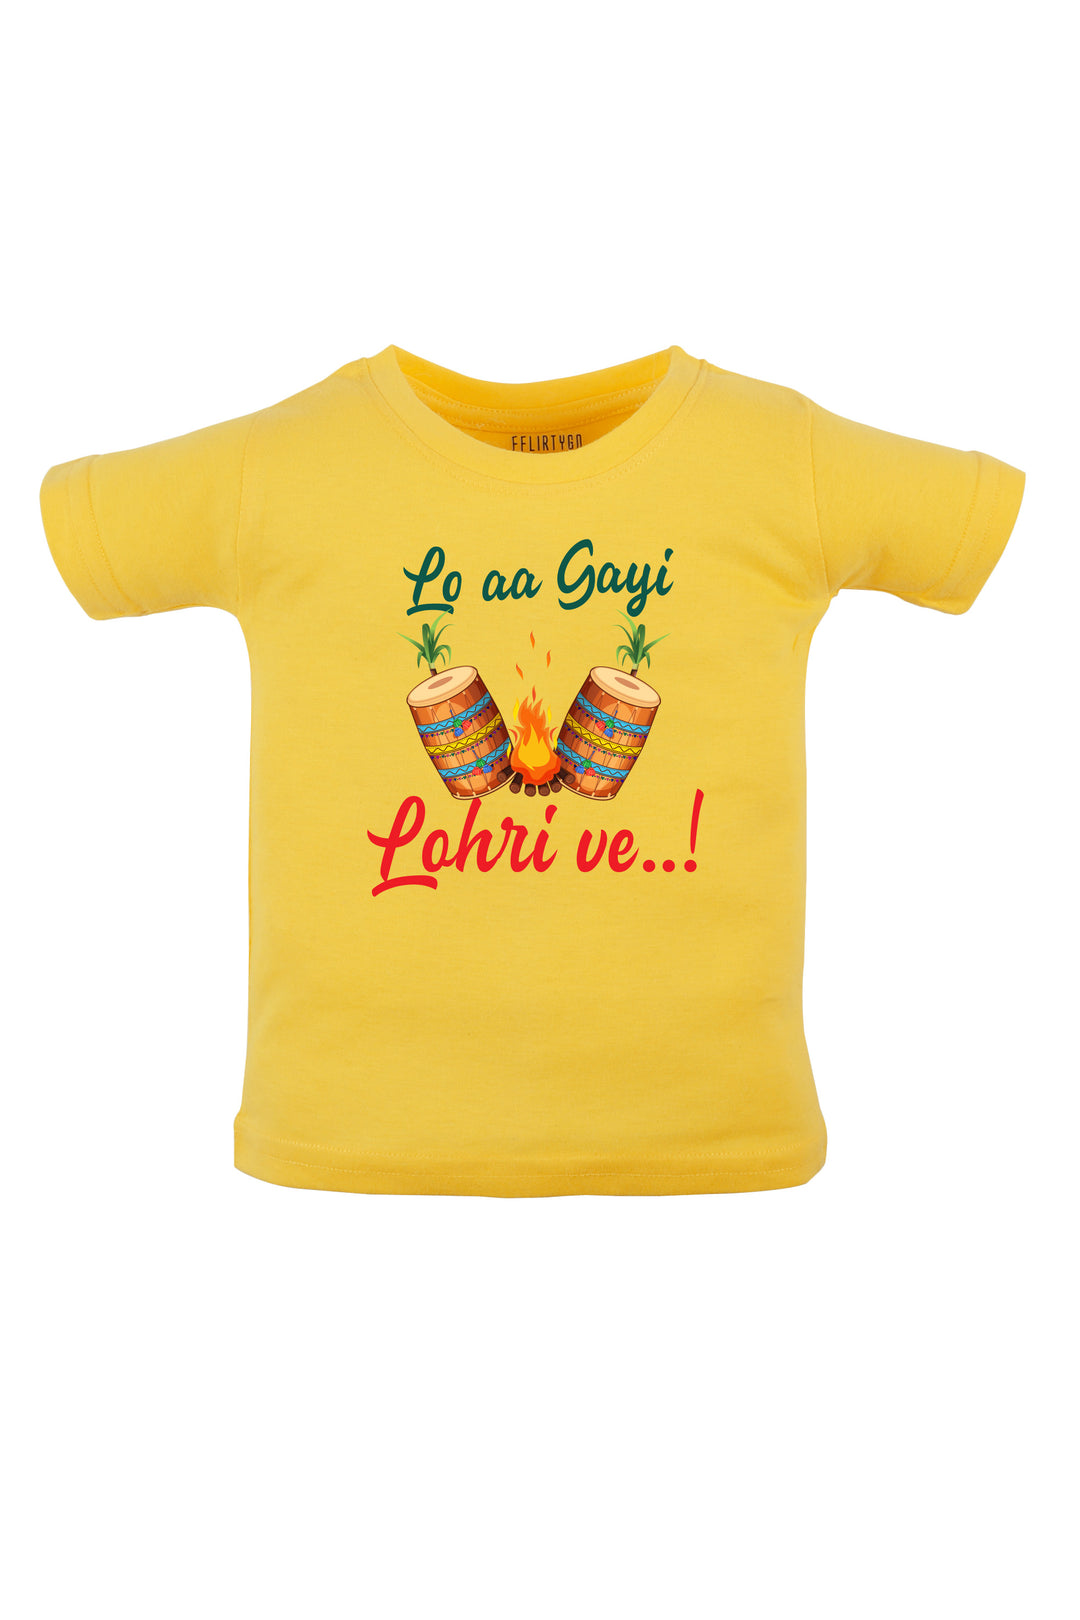 Lo Aa Gahi Lohri Ve Kids T Shirt